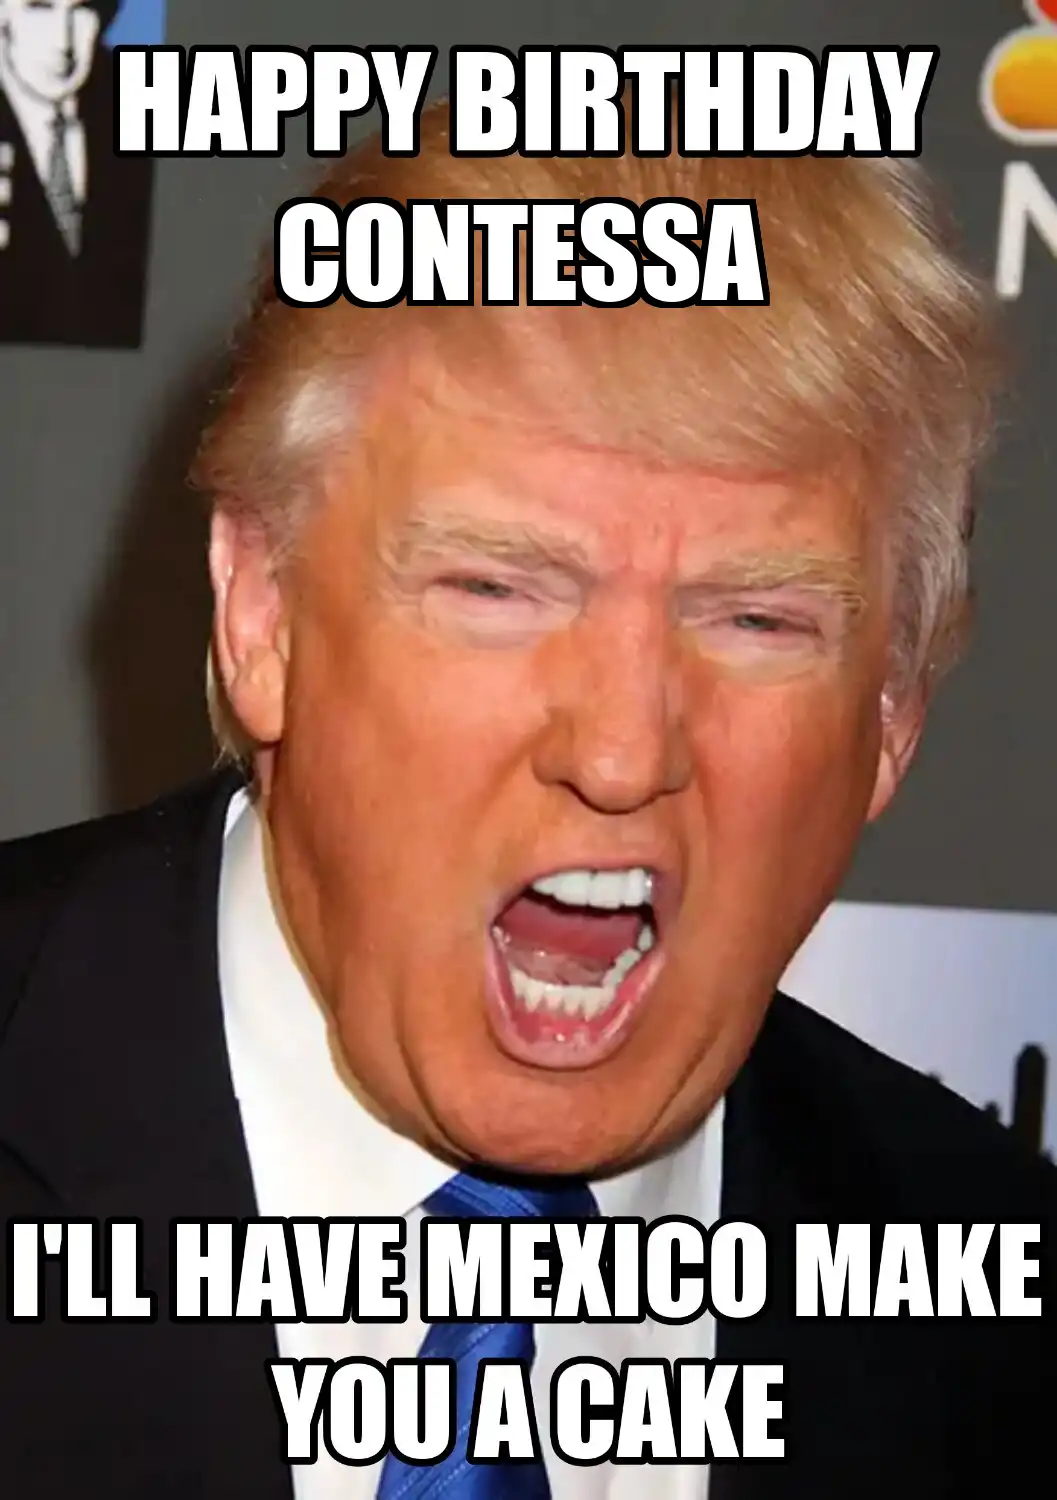 Happy Birthday Contessa Mexico Make You A Cake Meme